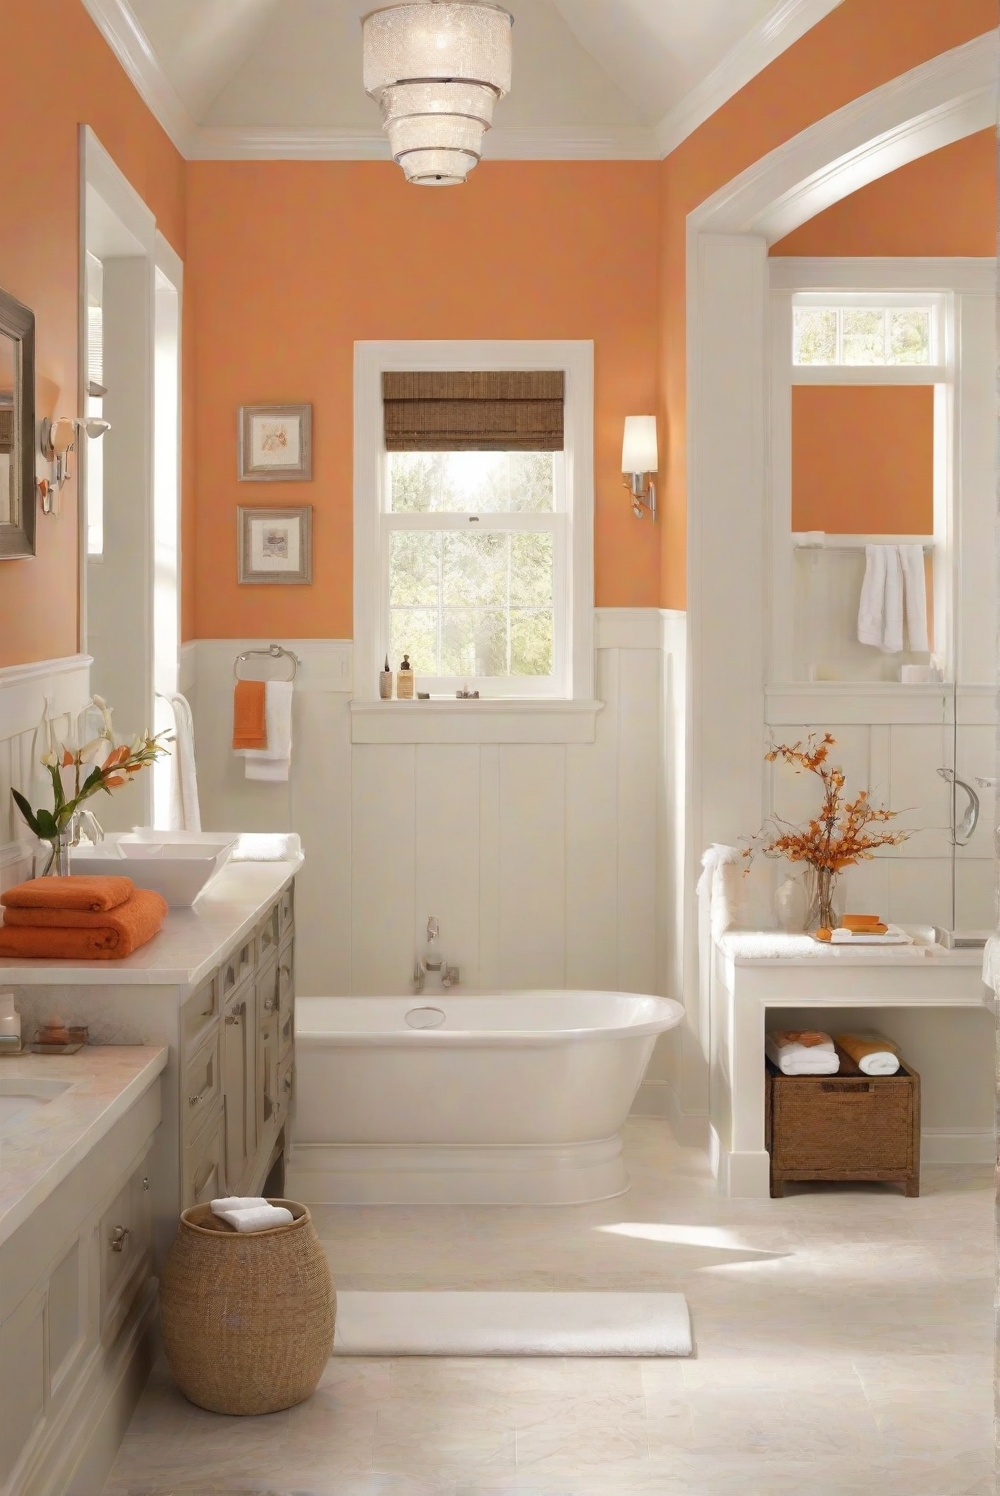 Tangerine bathroom decor, Bathroom design, Serene bathroom space, Home decor ideas, Interior design inspiration, Bathroom renovations, Colorful bathroom accents